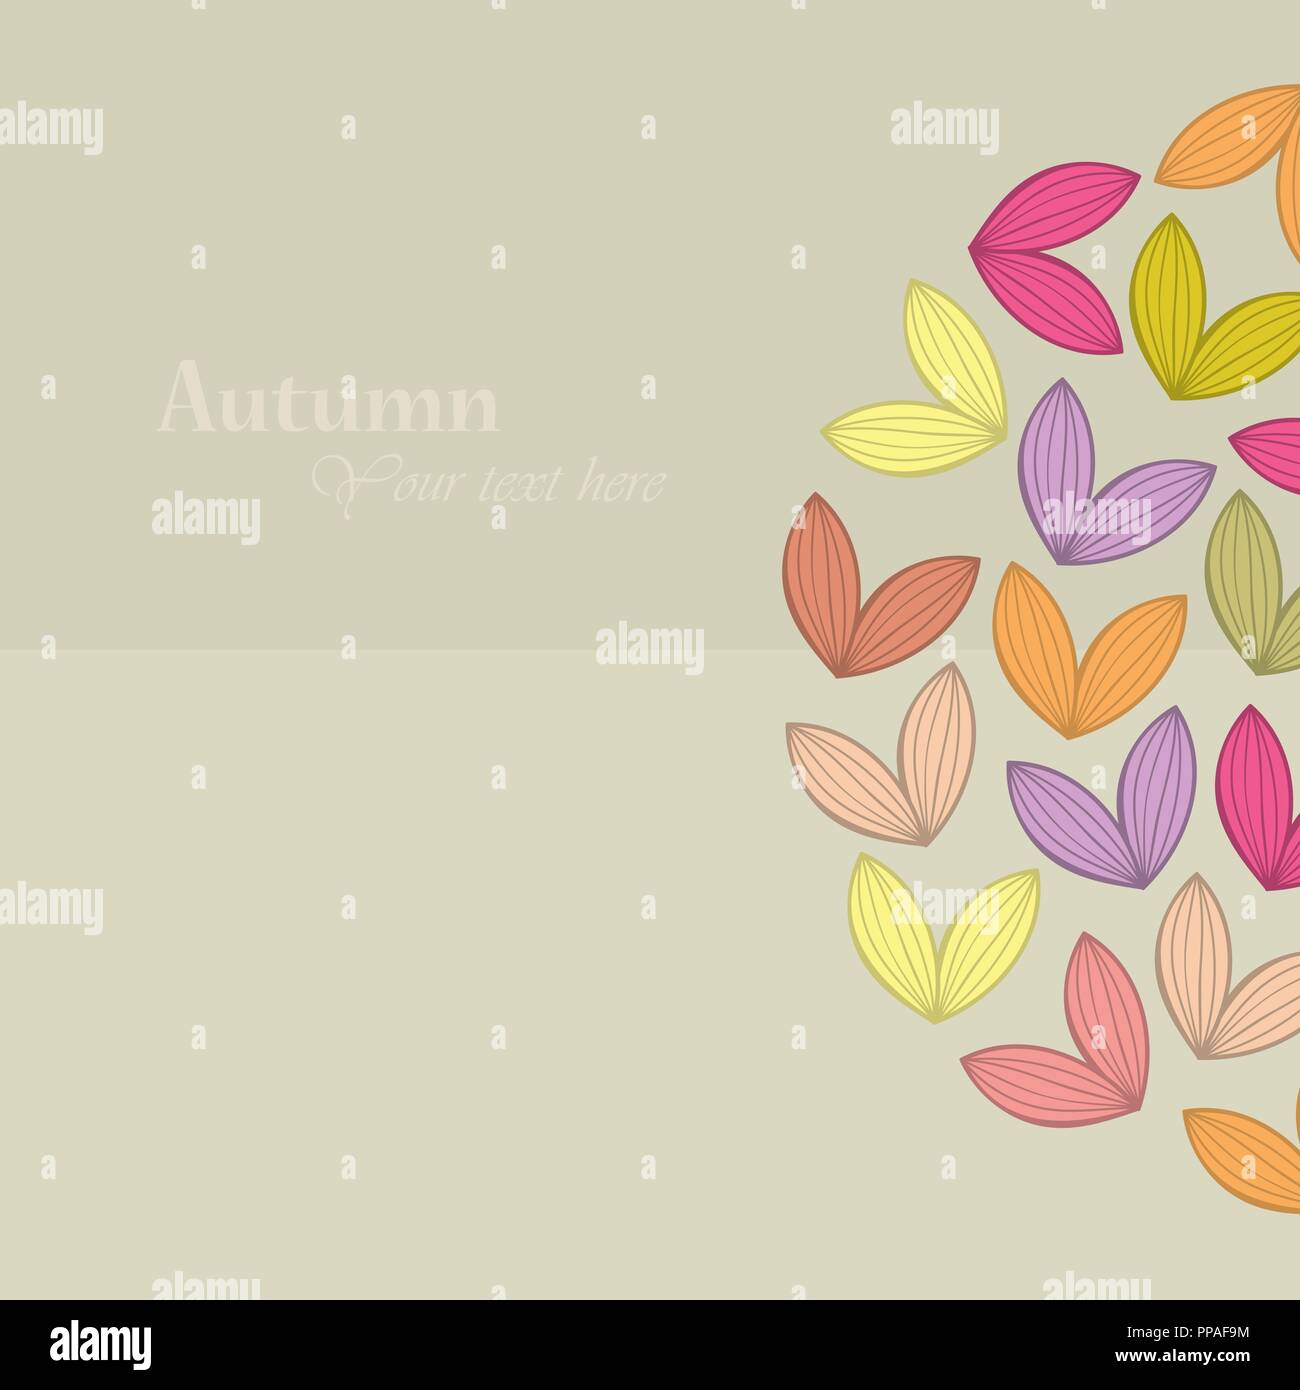 Autumn theme falling leaves vector illustration Stock Vector